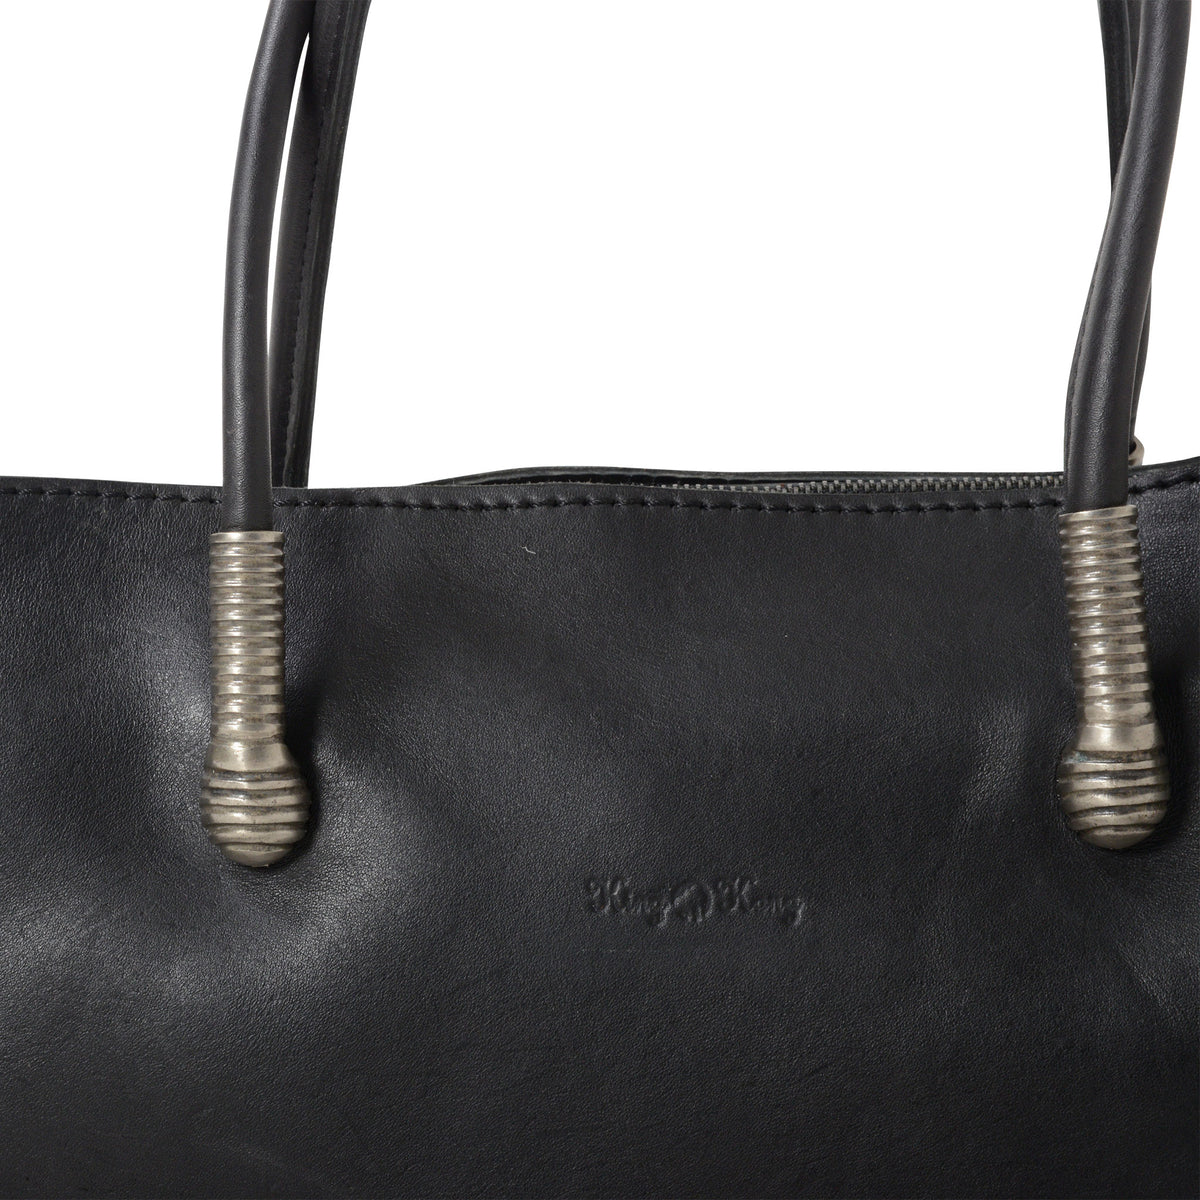 Leather Large Business Handbag